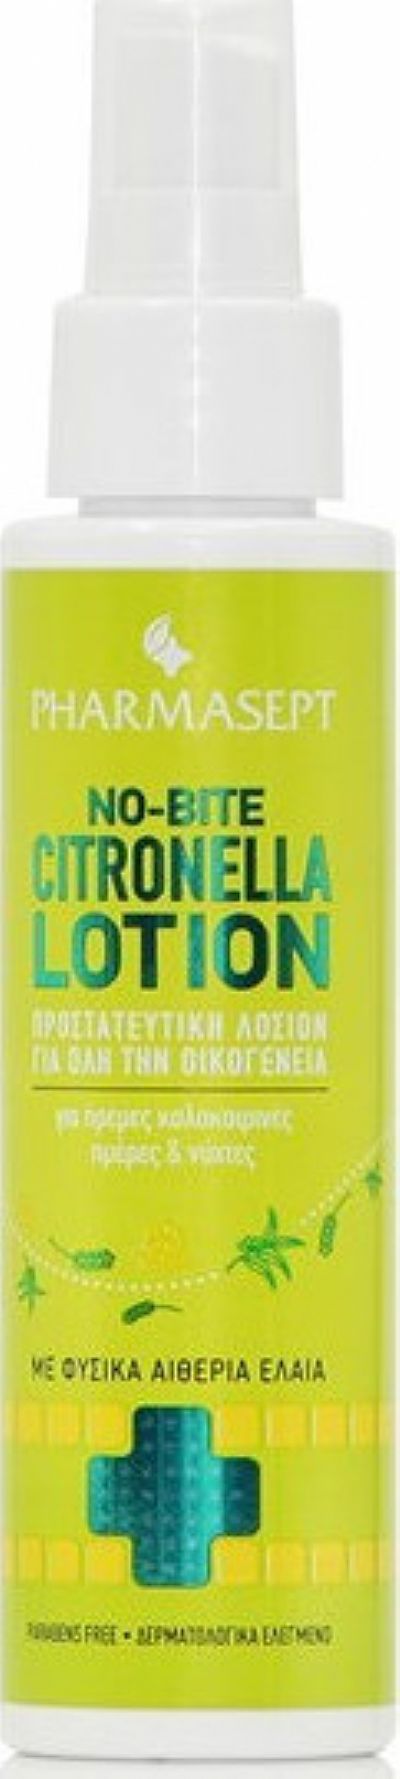 Pharmasept No-Bite Citronella Lotion 100ml